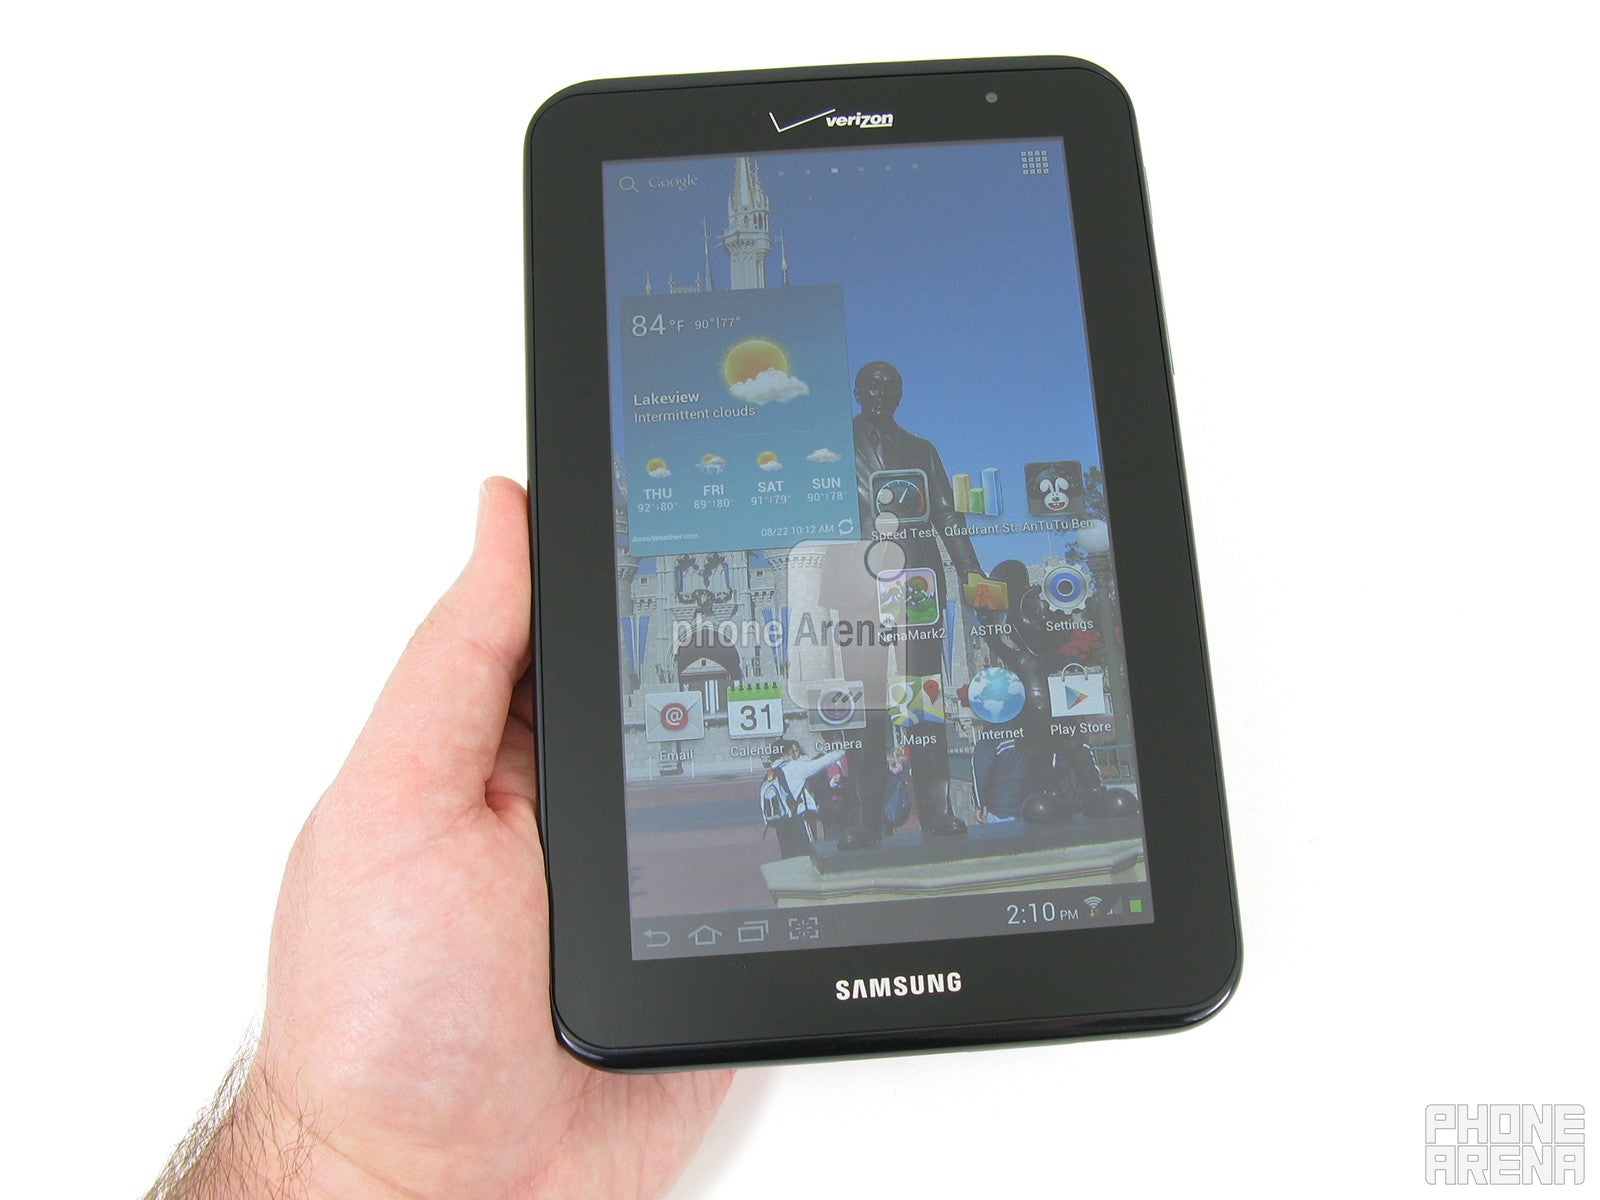 Samsung Galaxy Tab 2 (7.0) LTE Review